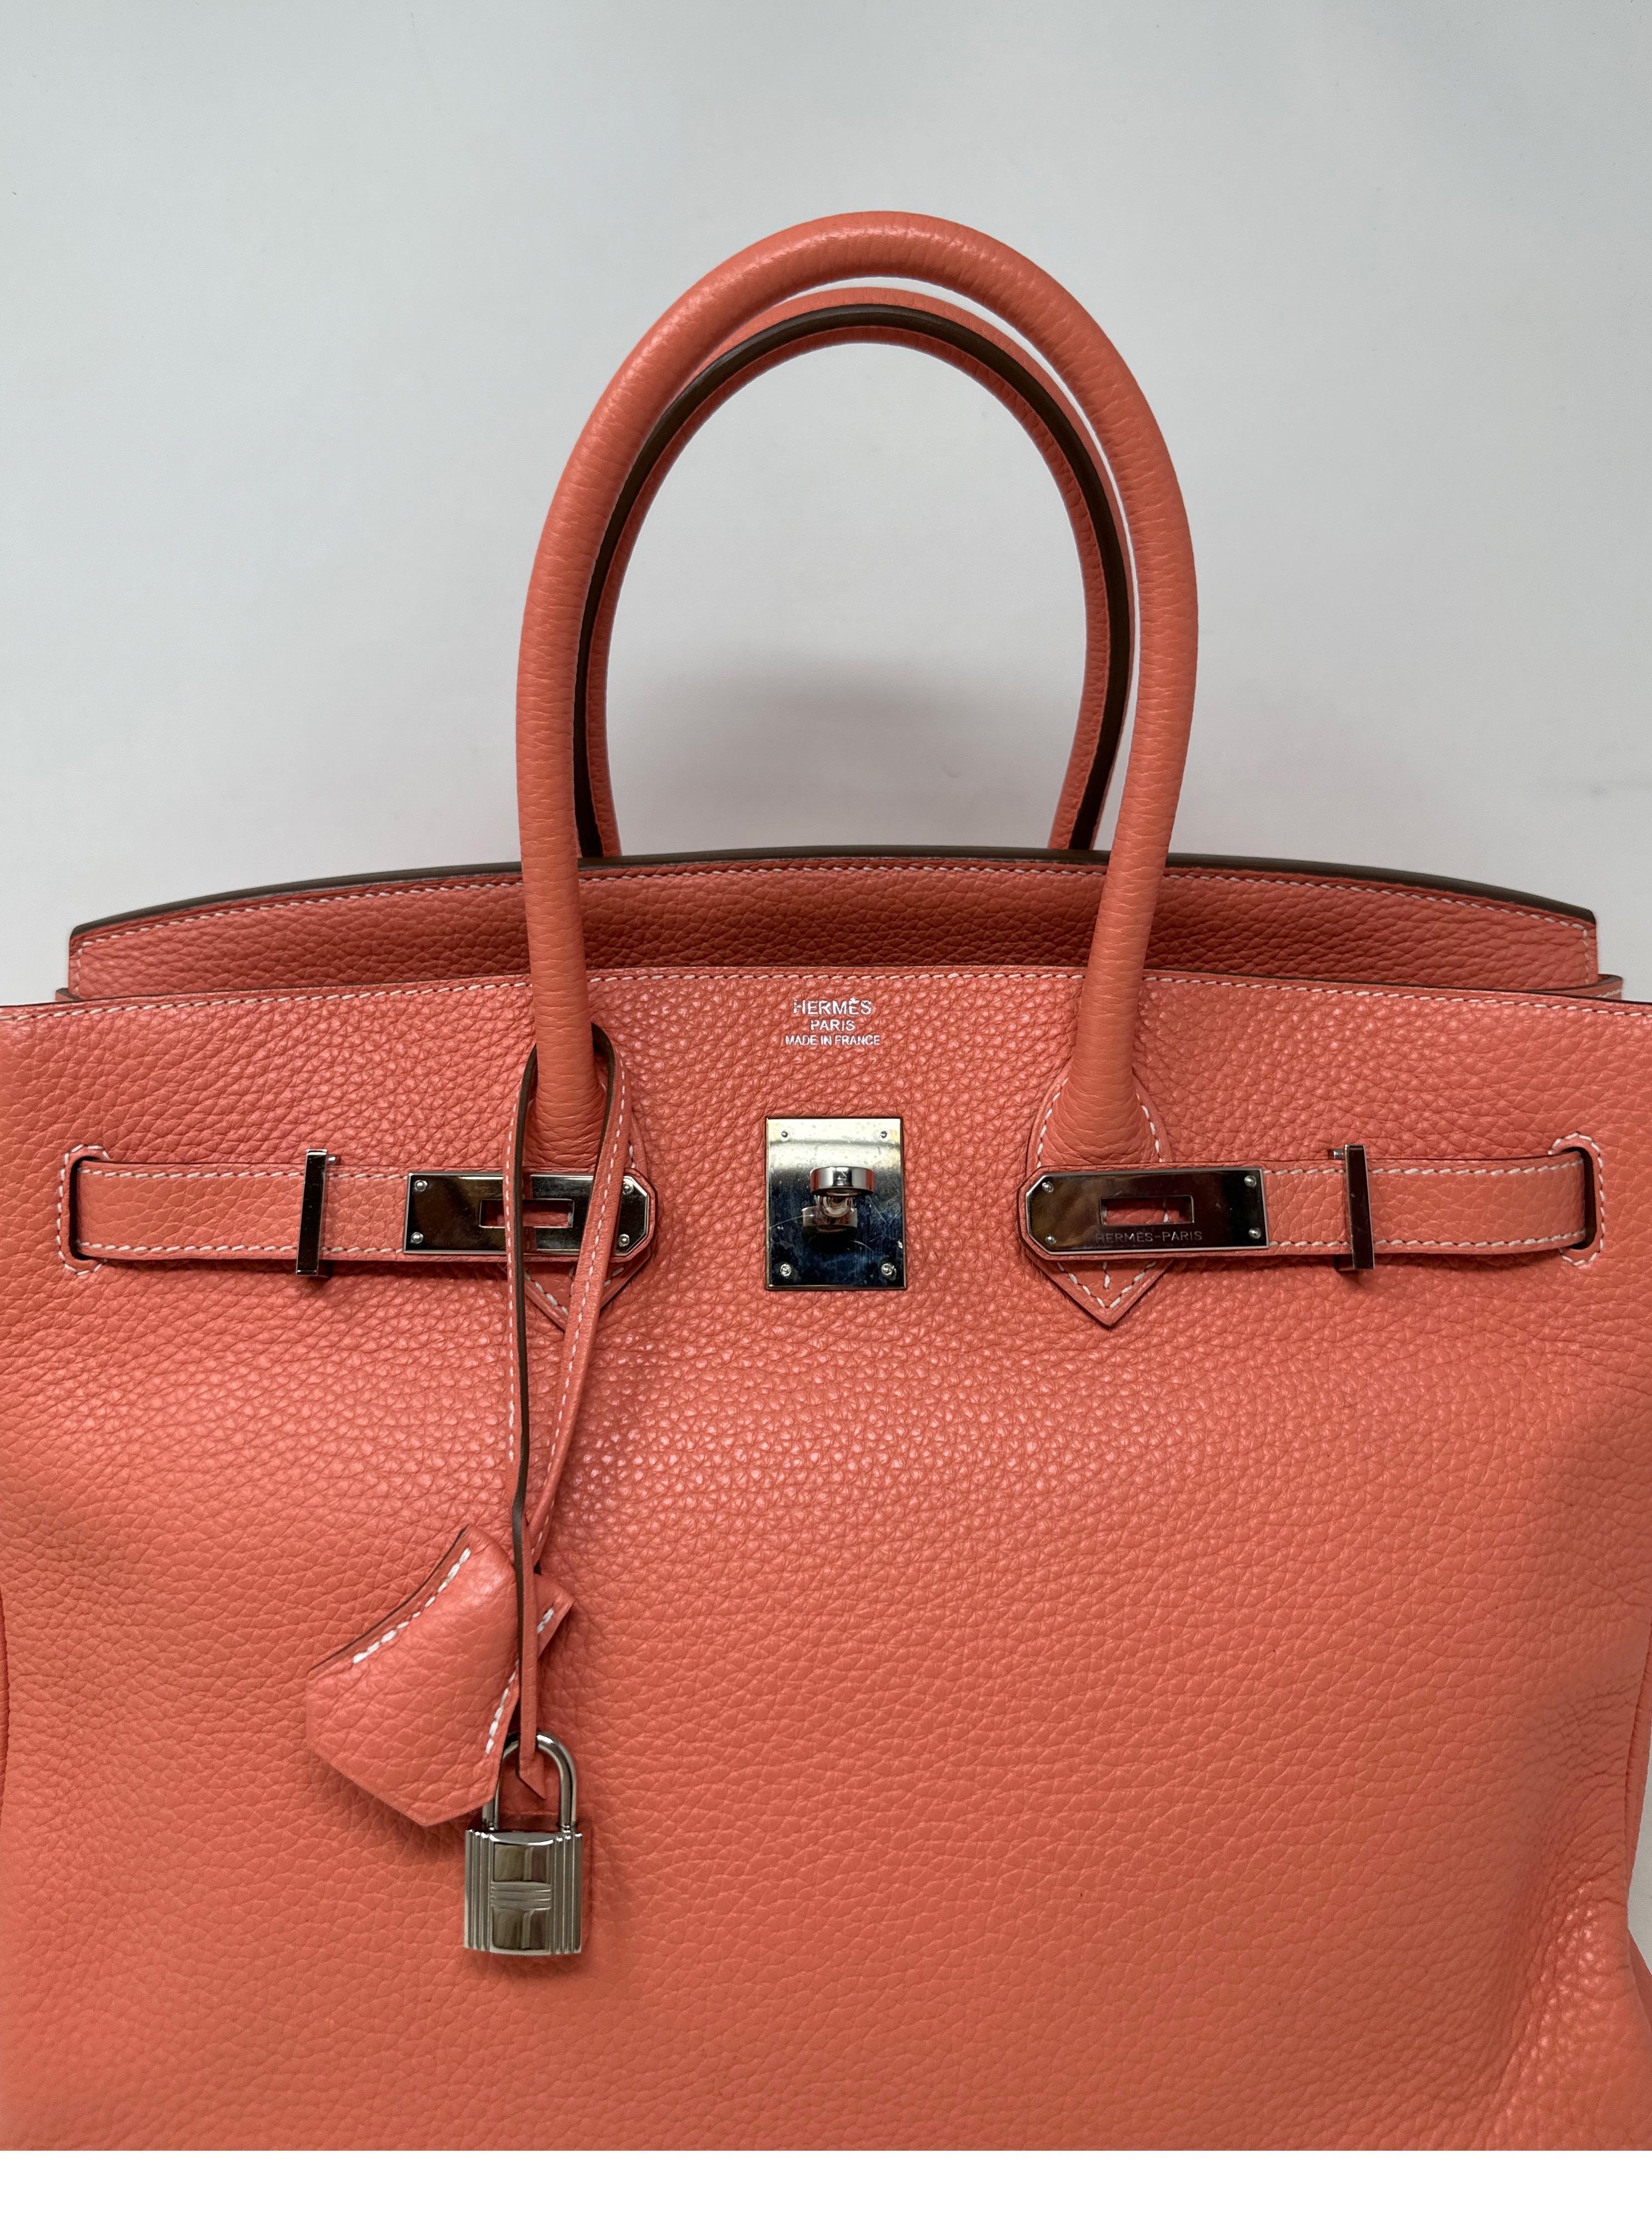 Hermes Crevette Birkin 35 Bag  In Excellent Condition For Sale In Athens, GA